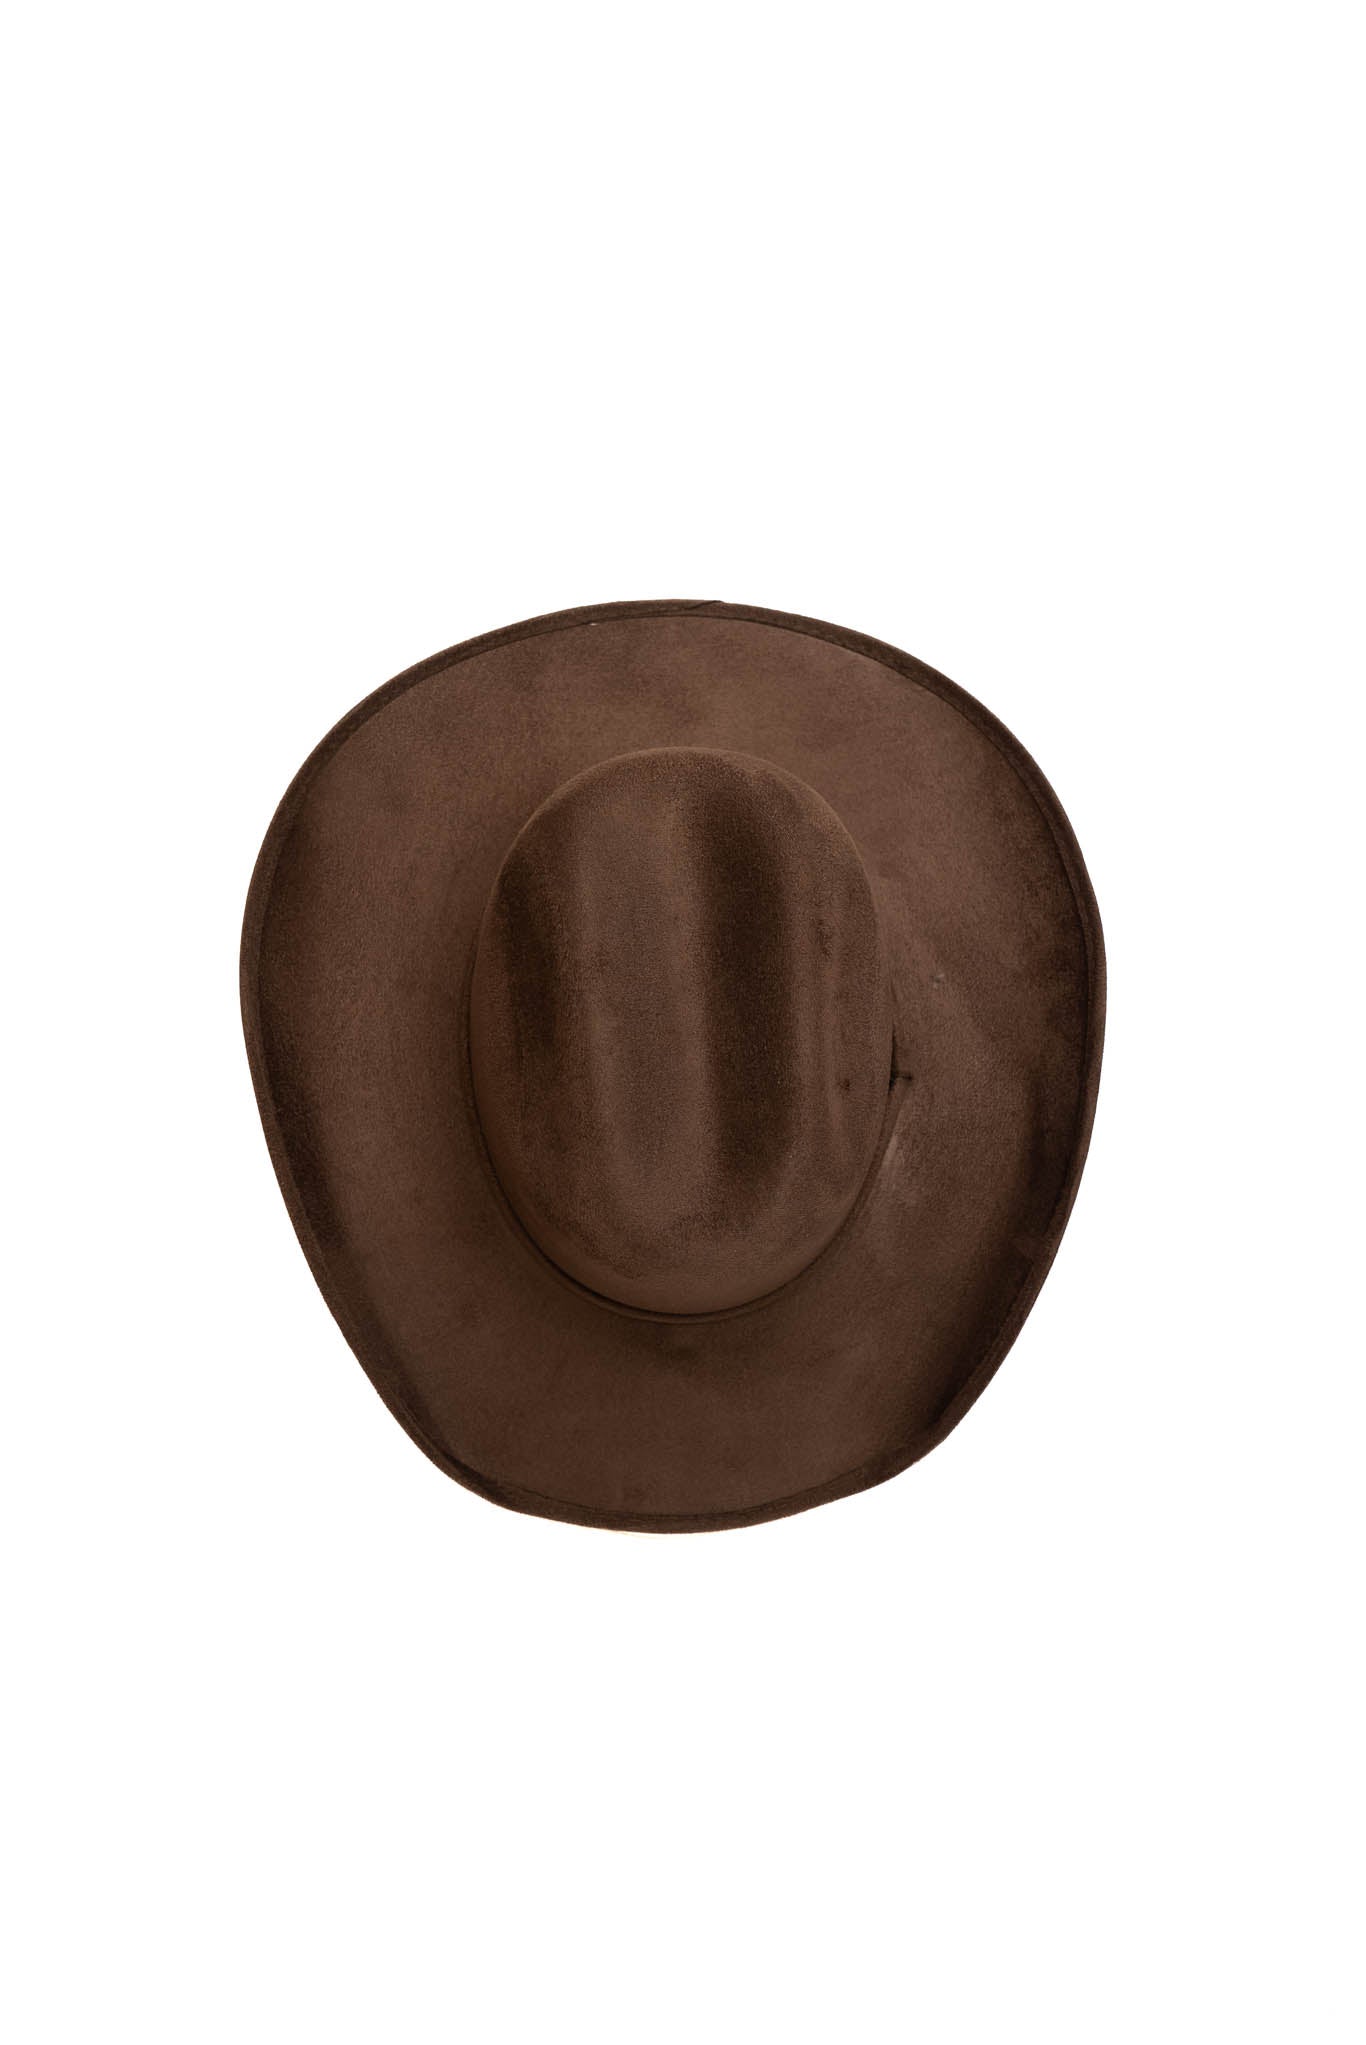 Little Damian Malboro Gamuza Cowboy Hat